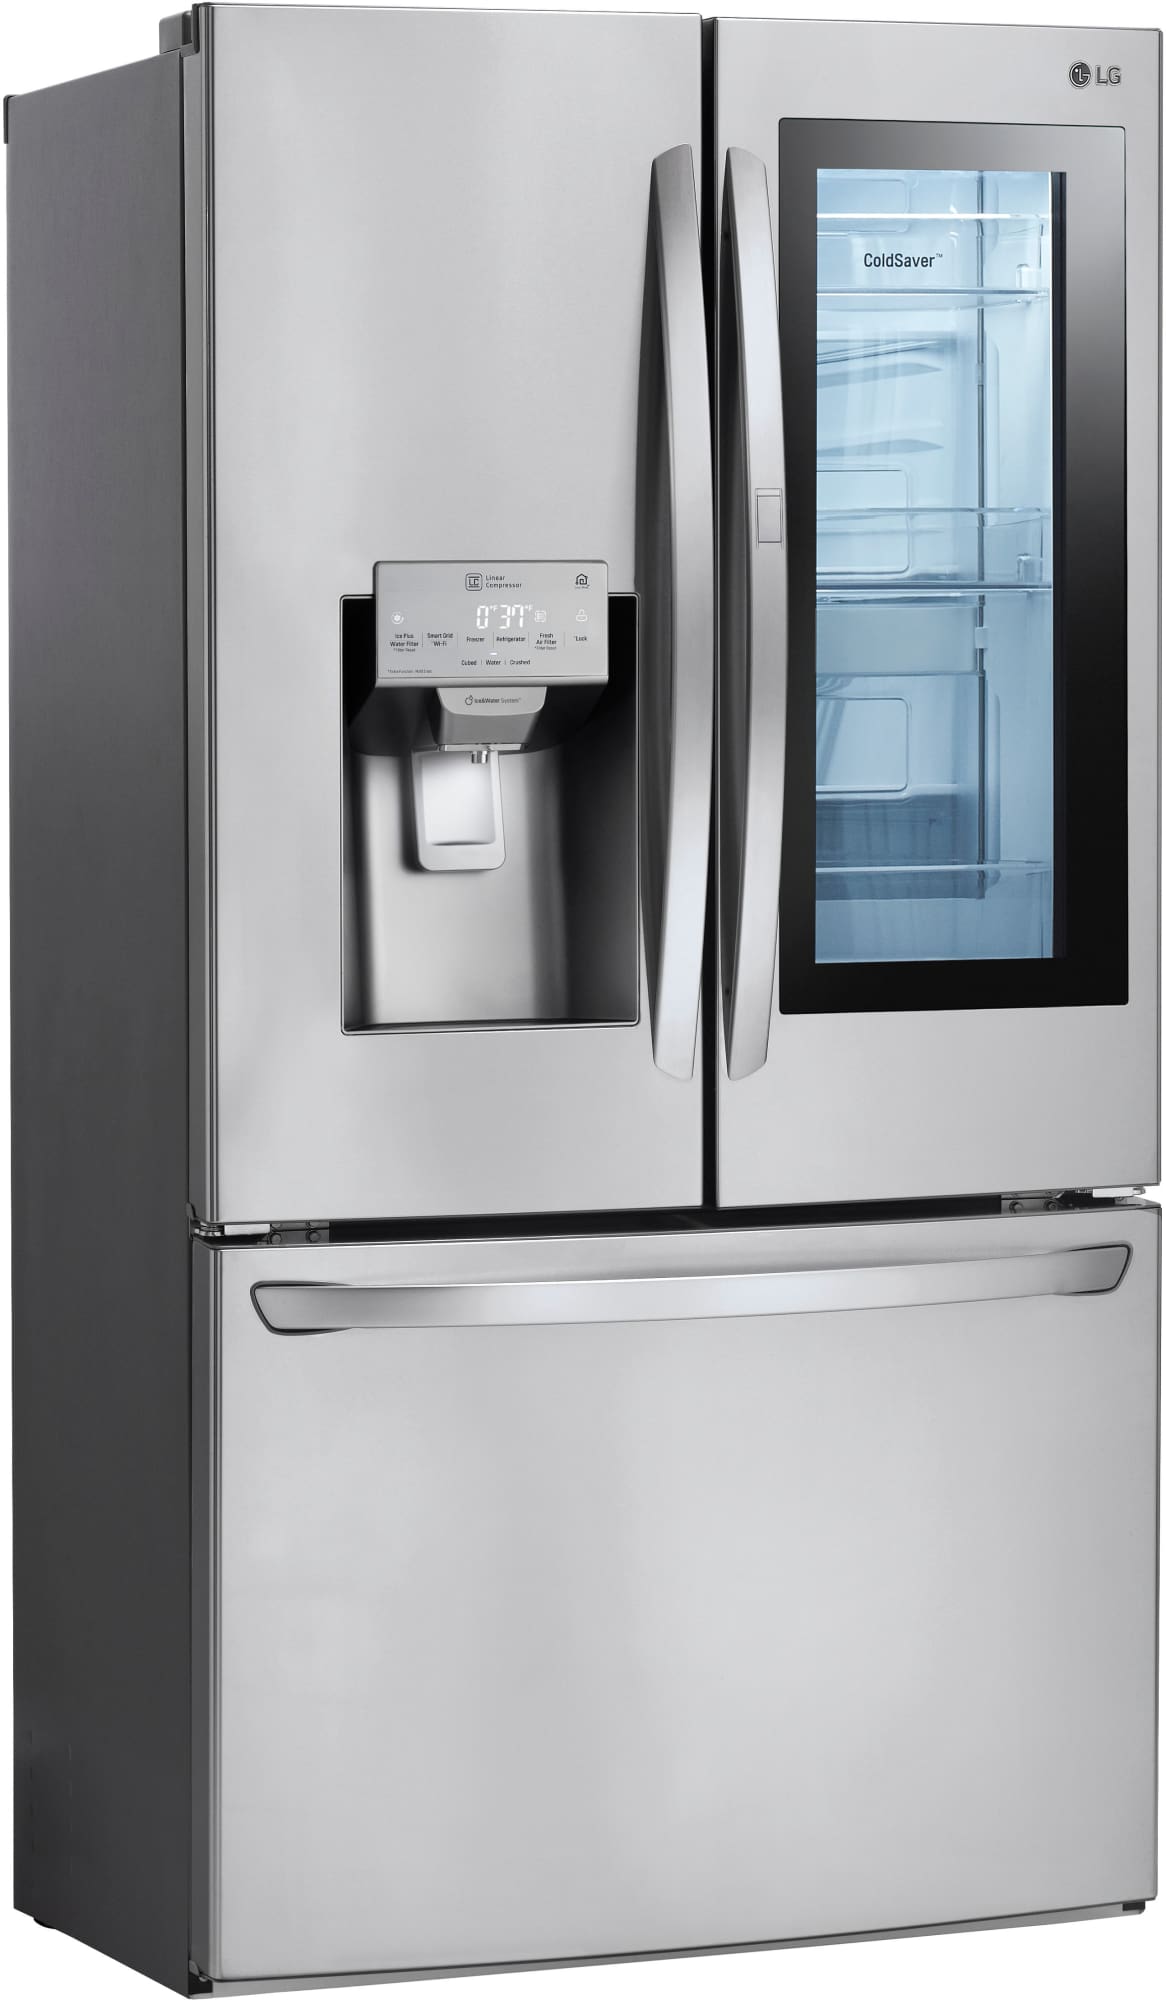 LG LFXS28596S 36 Inch Smart French Door Refrigerator with 27.5 Cu. Ft. Capacity, WiFi, InstaView 